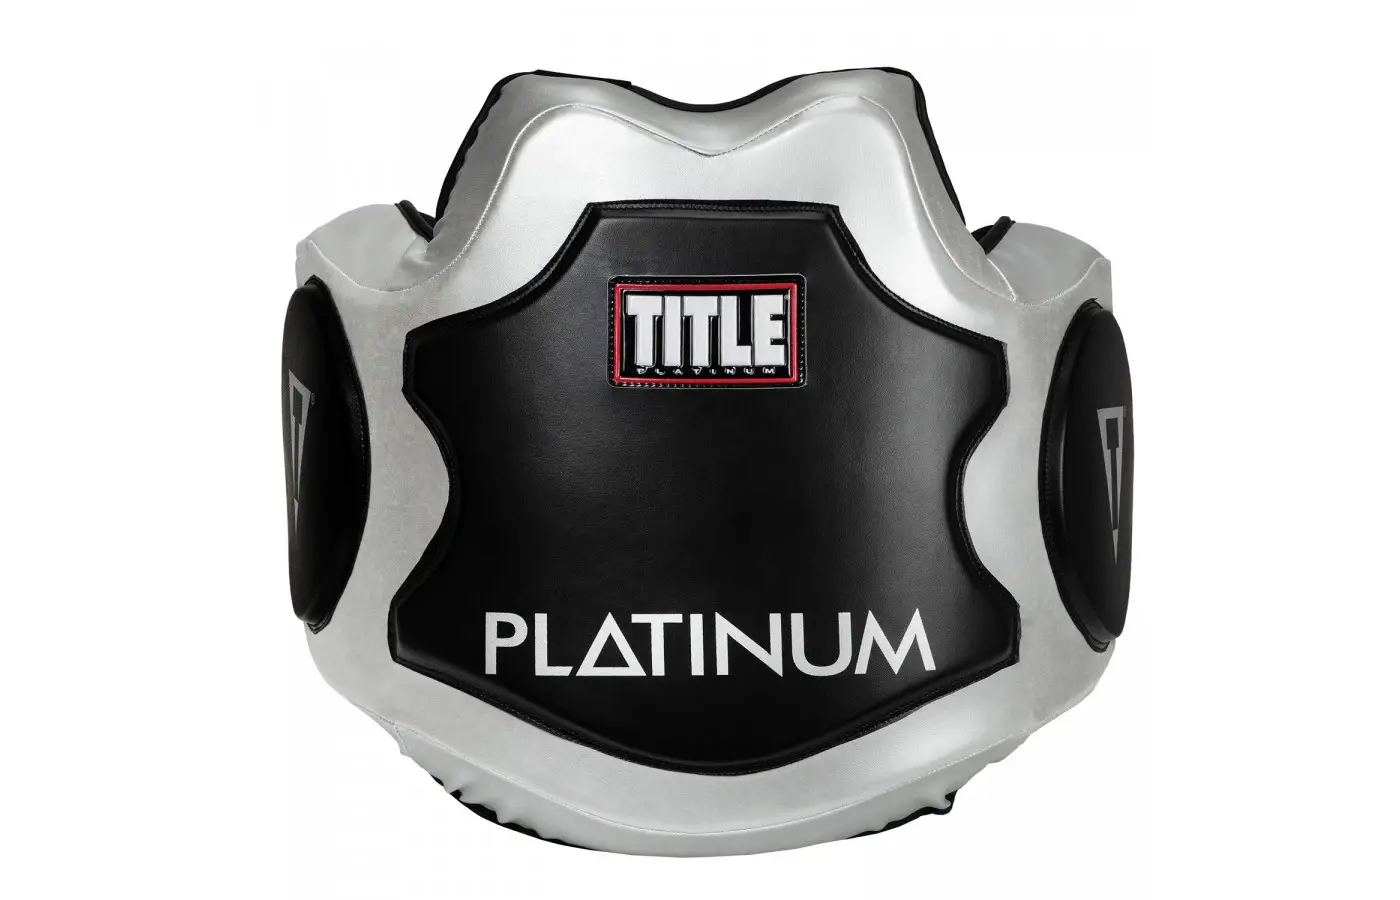 title platinum front